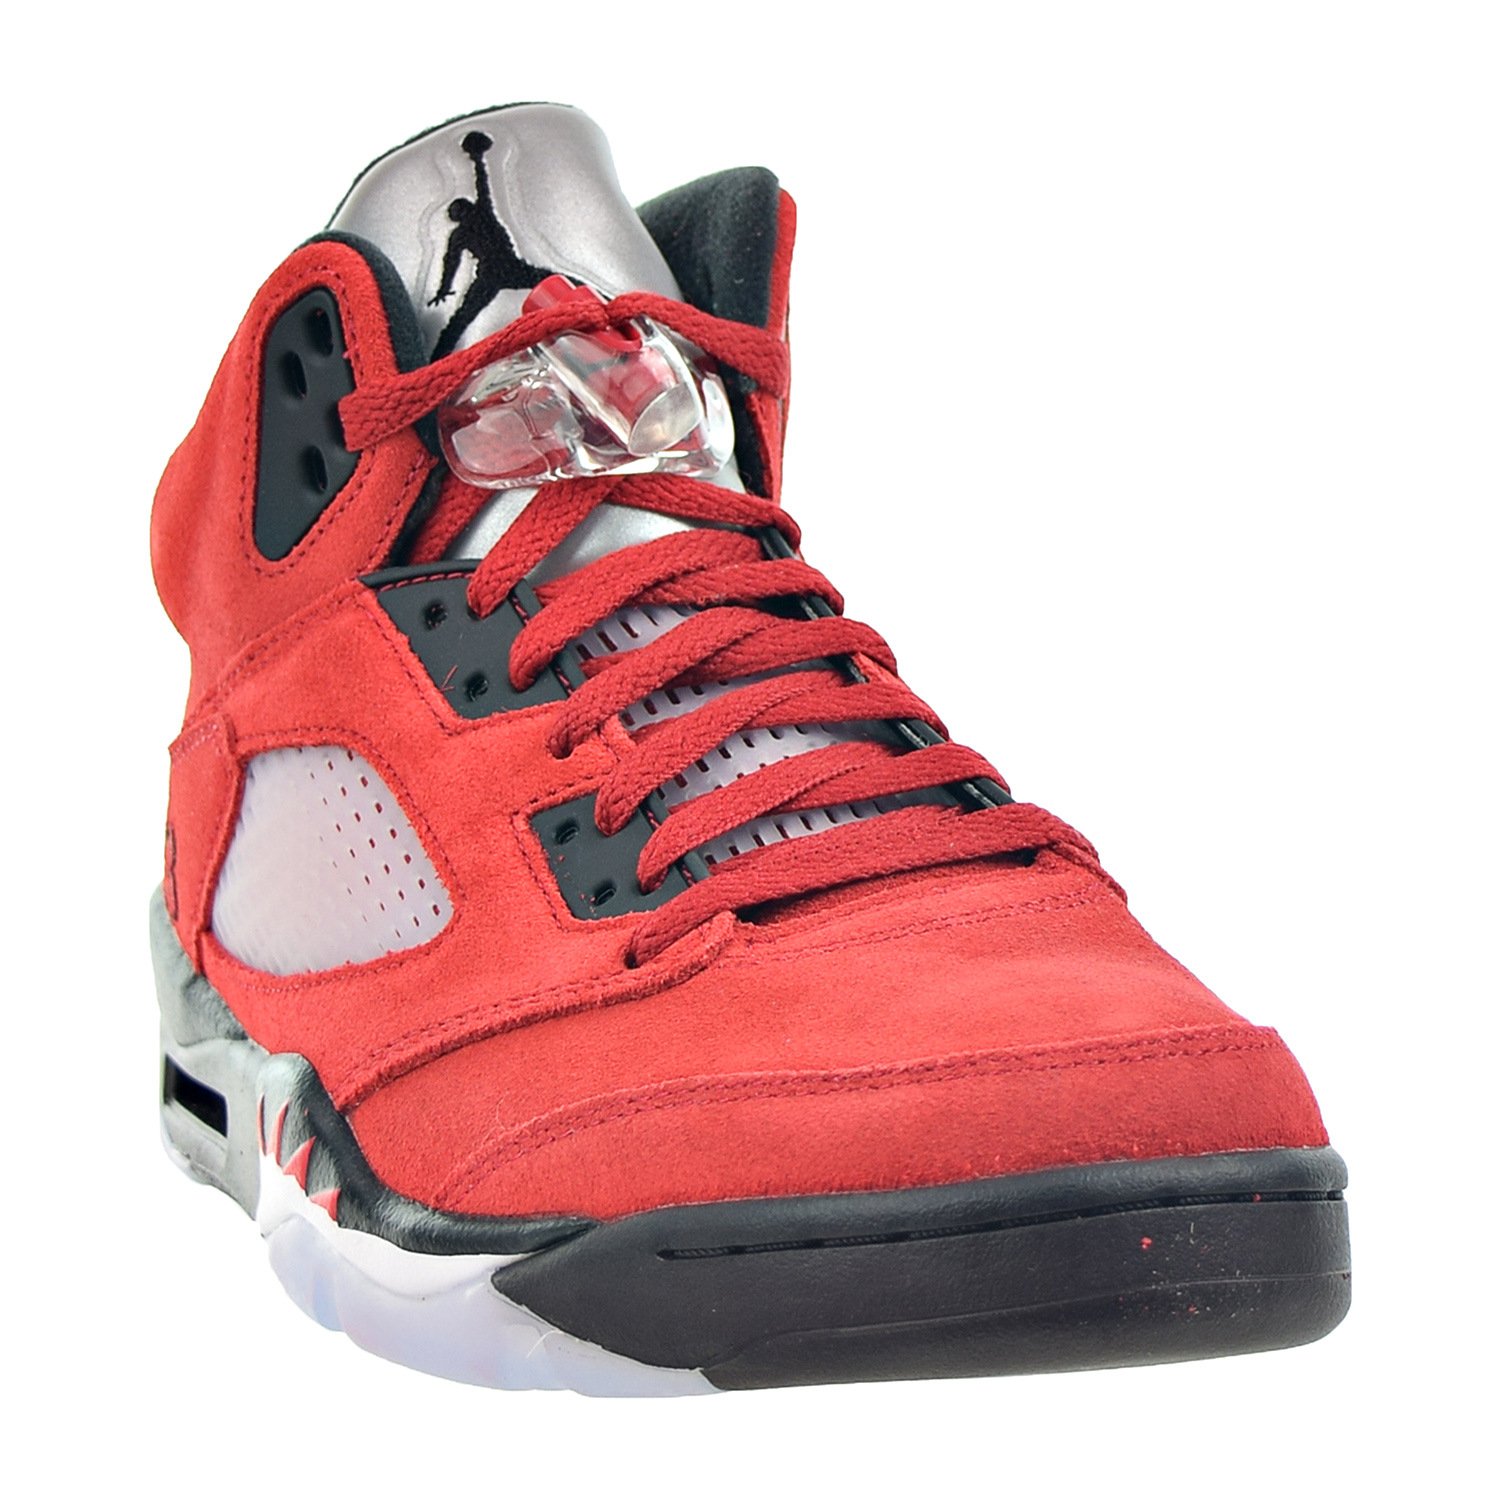 Michael Jordan Air Jordan 5 Retro "Raging Bulls/Toro Bravo" Men's Shoes Varsity Red/Black dd0587-600